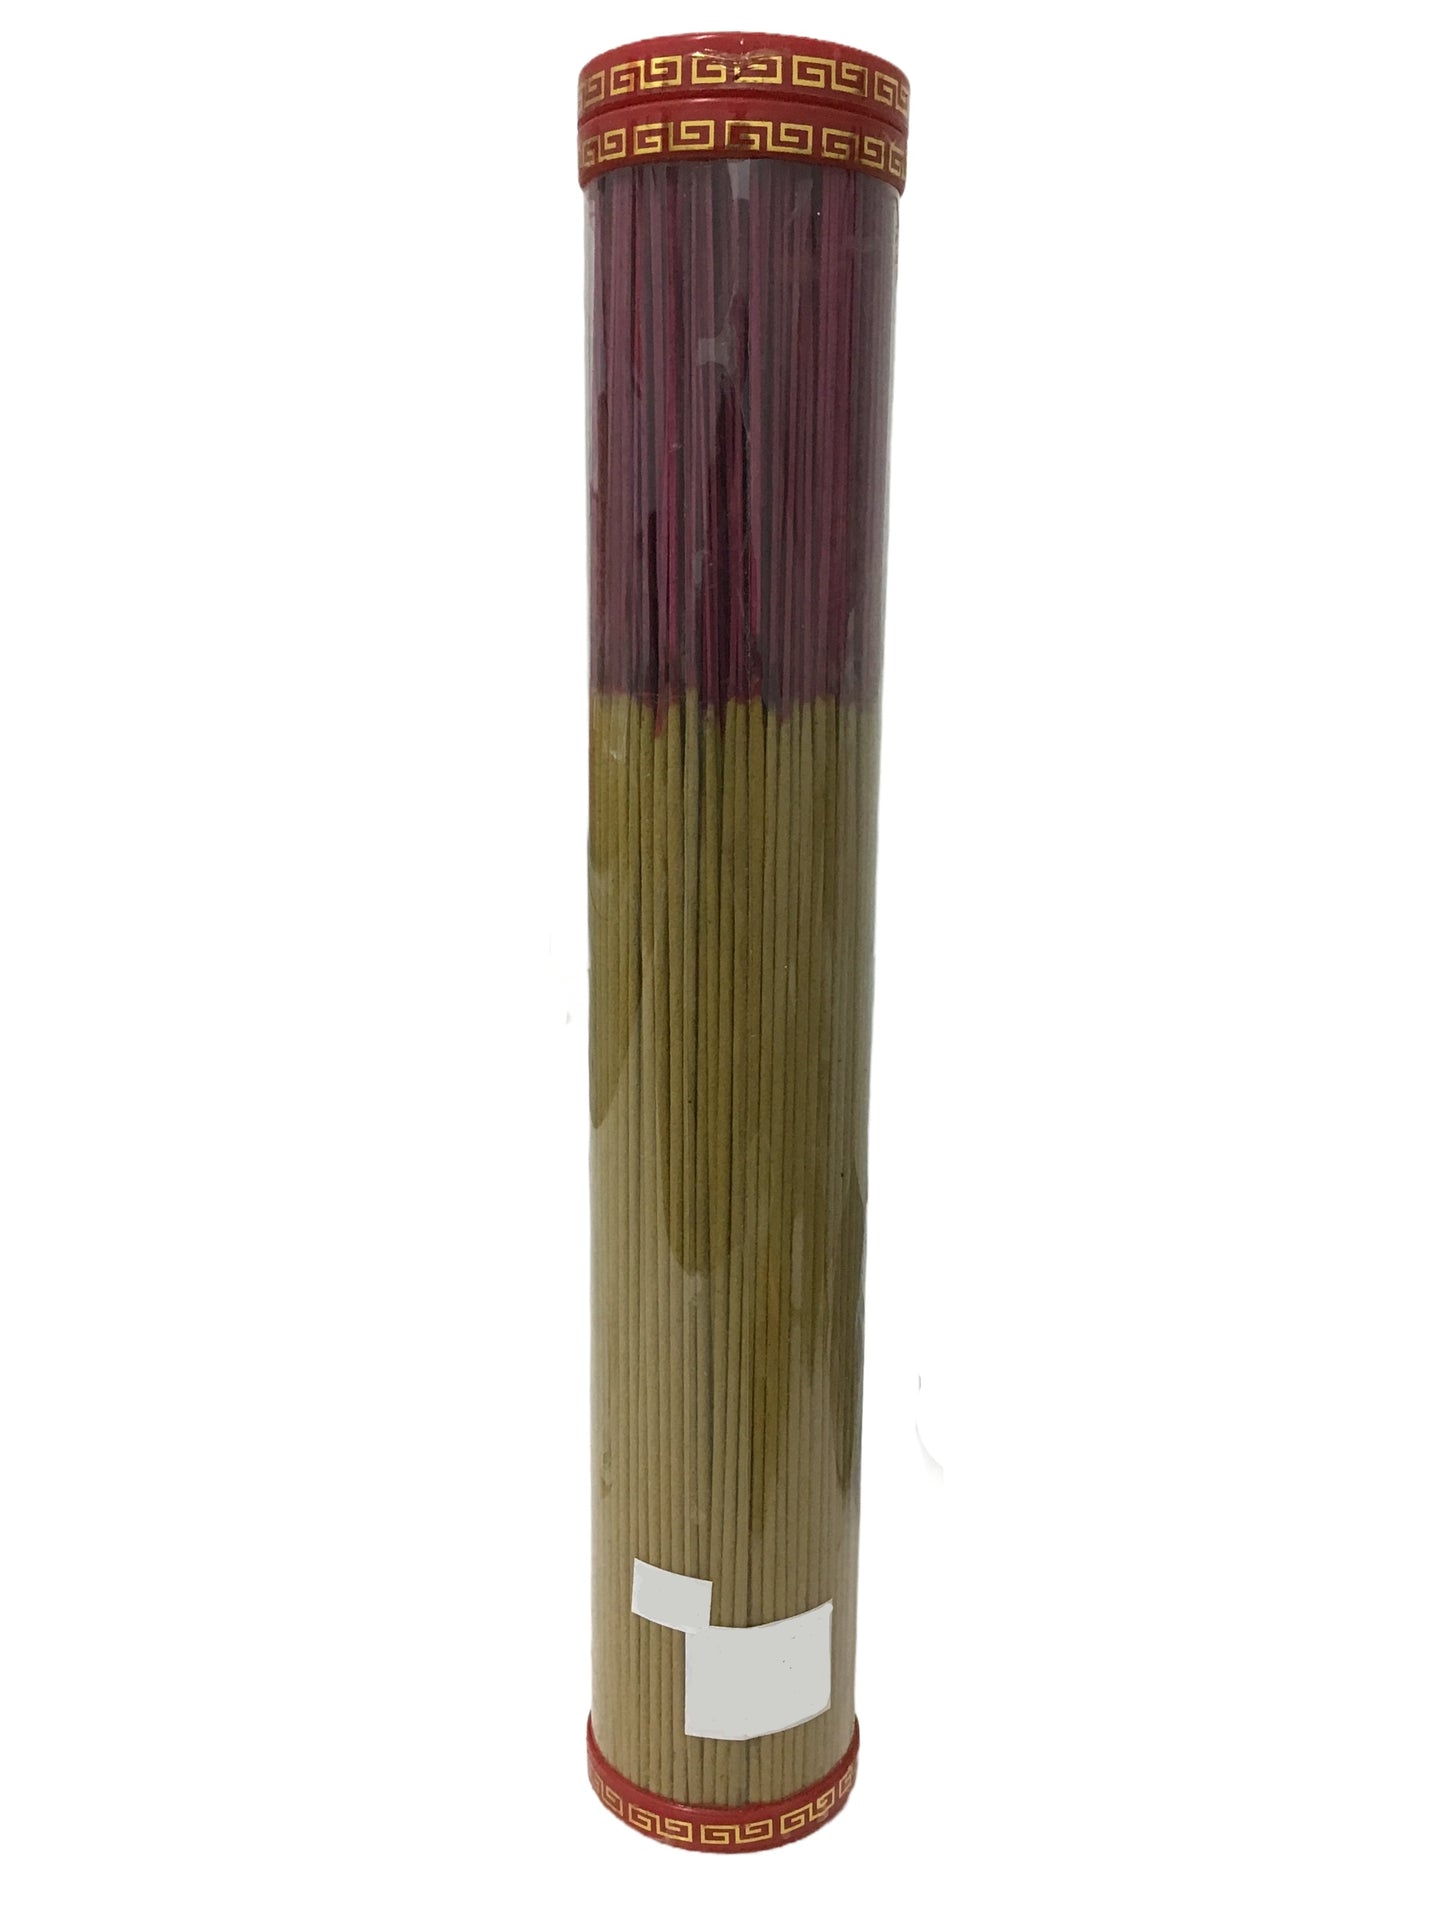 32.7cm Long Incense Sticks for the Buddha - About 400 Sticks 双鲤牌 金多宝贡檀香 微烟